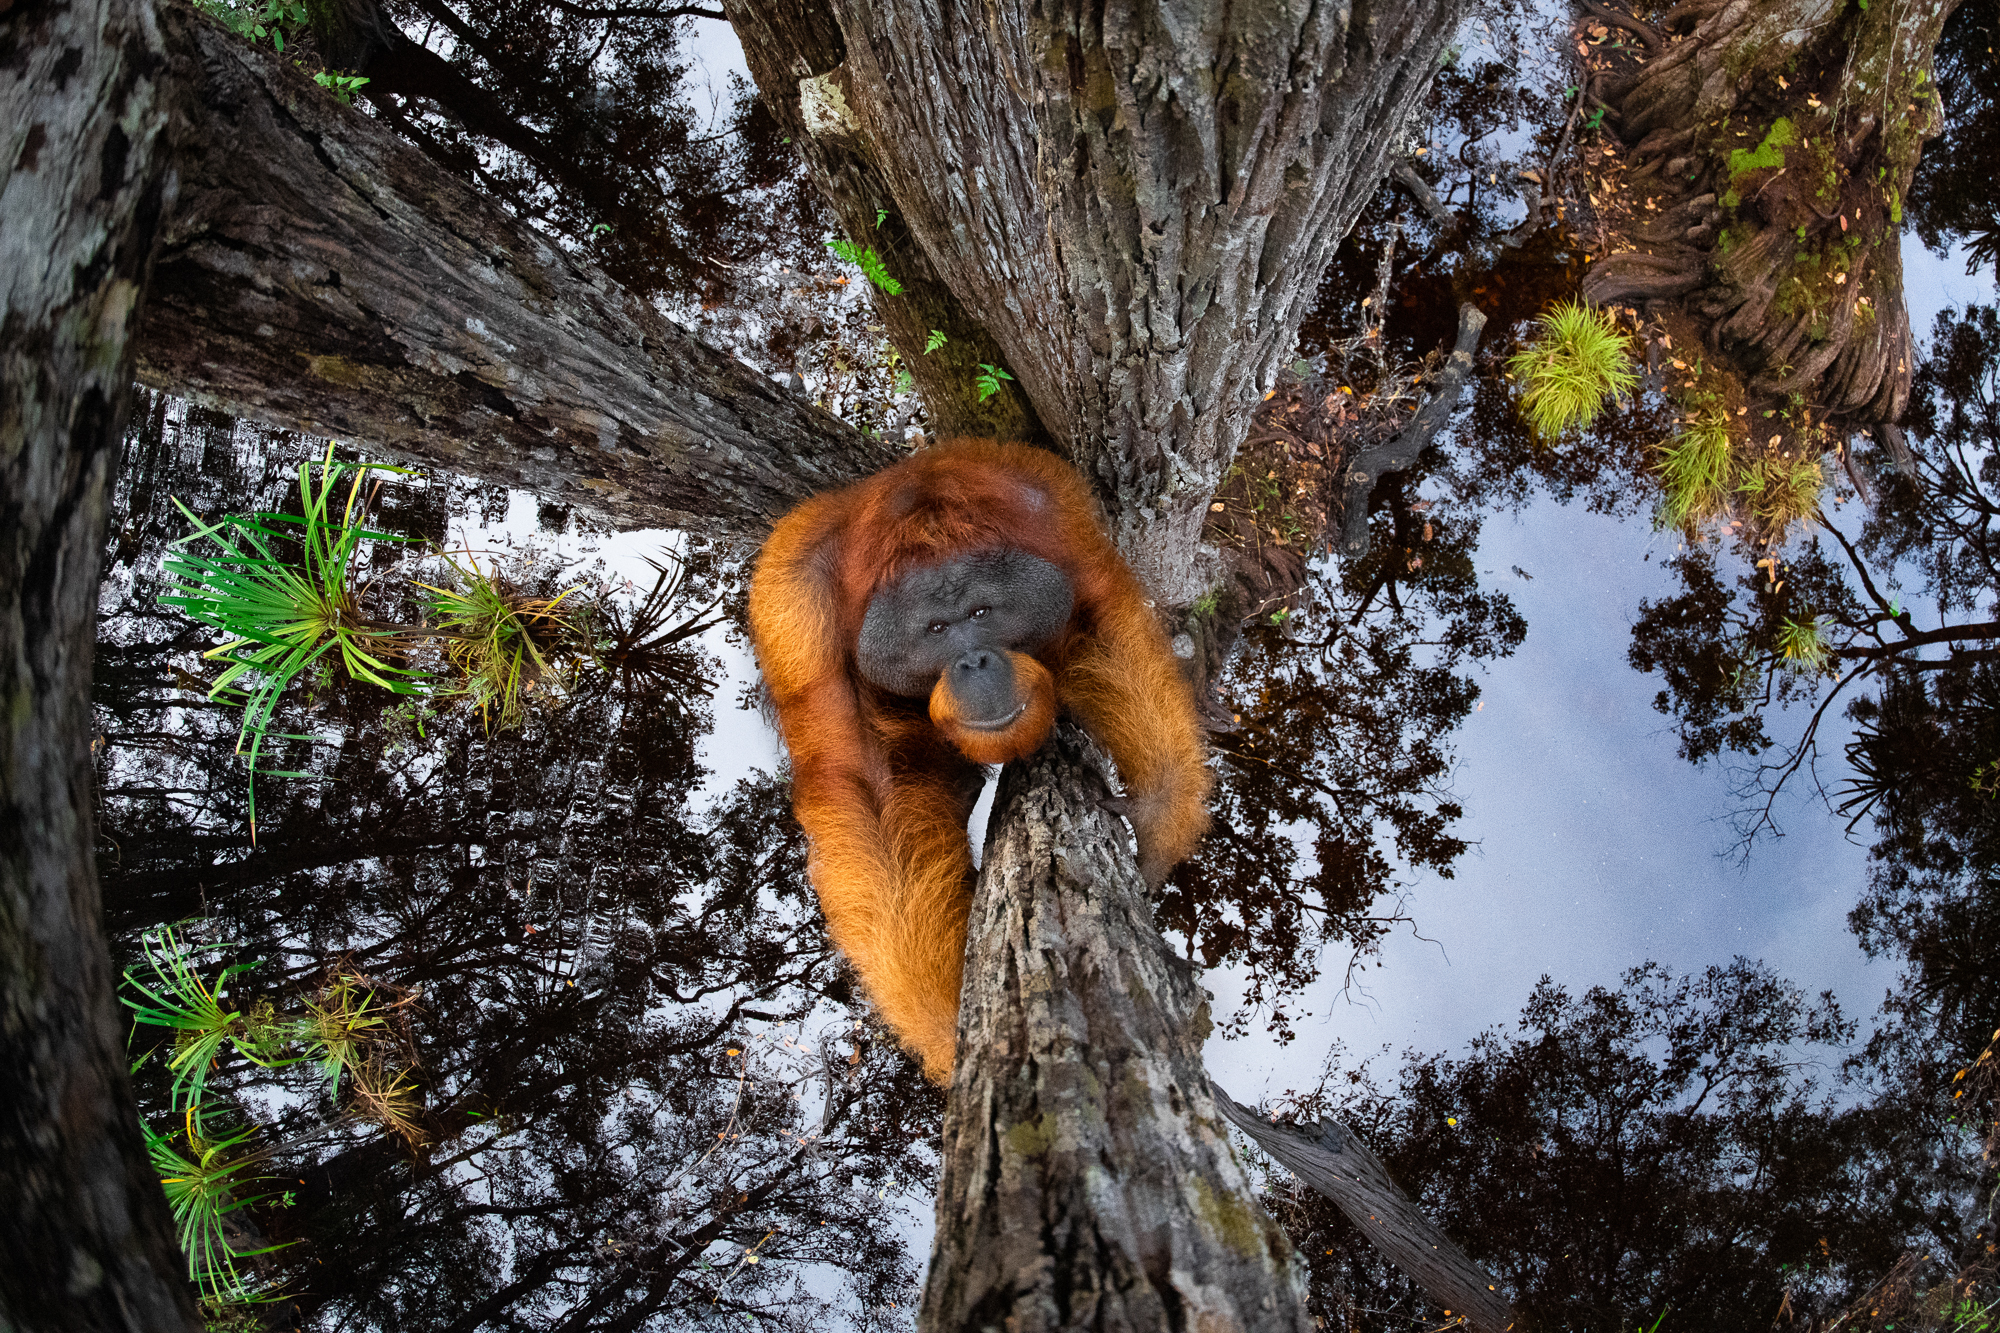 An orangutan climbing up a tree